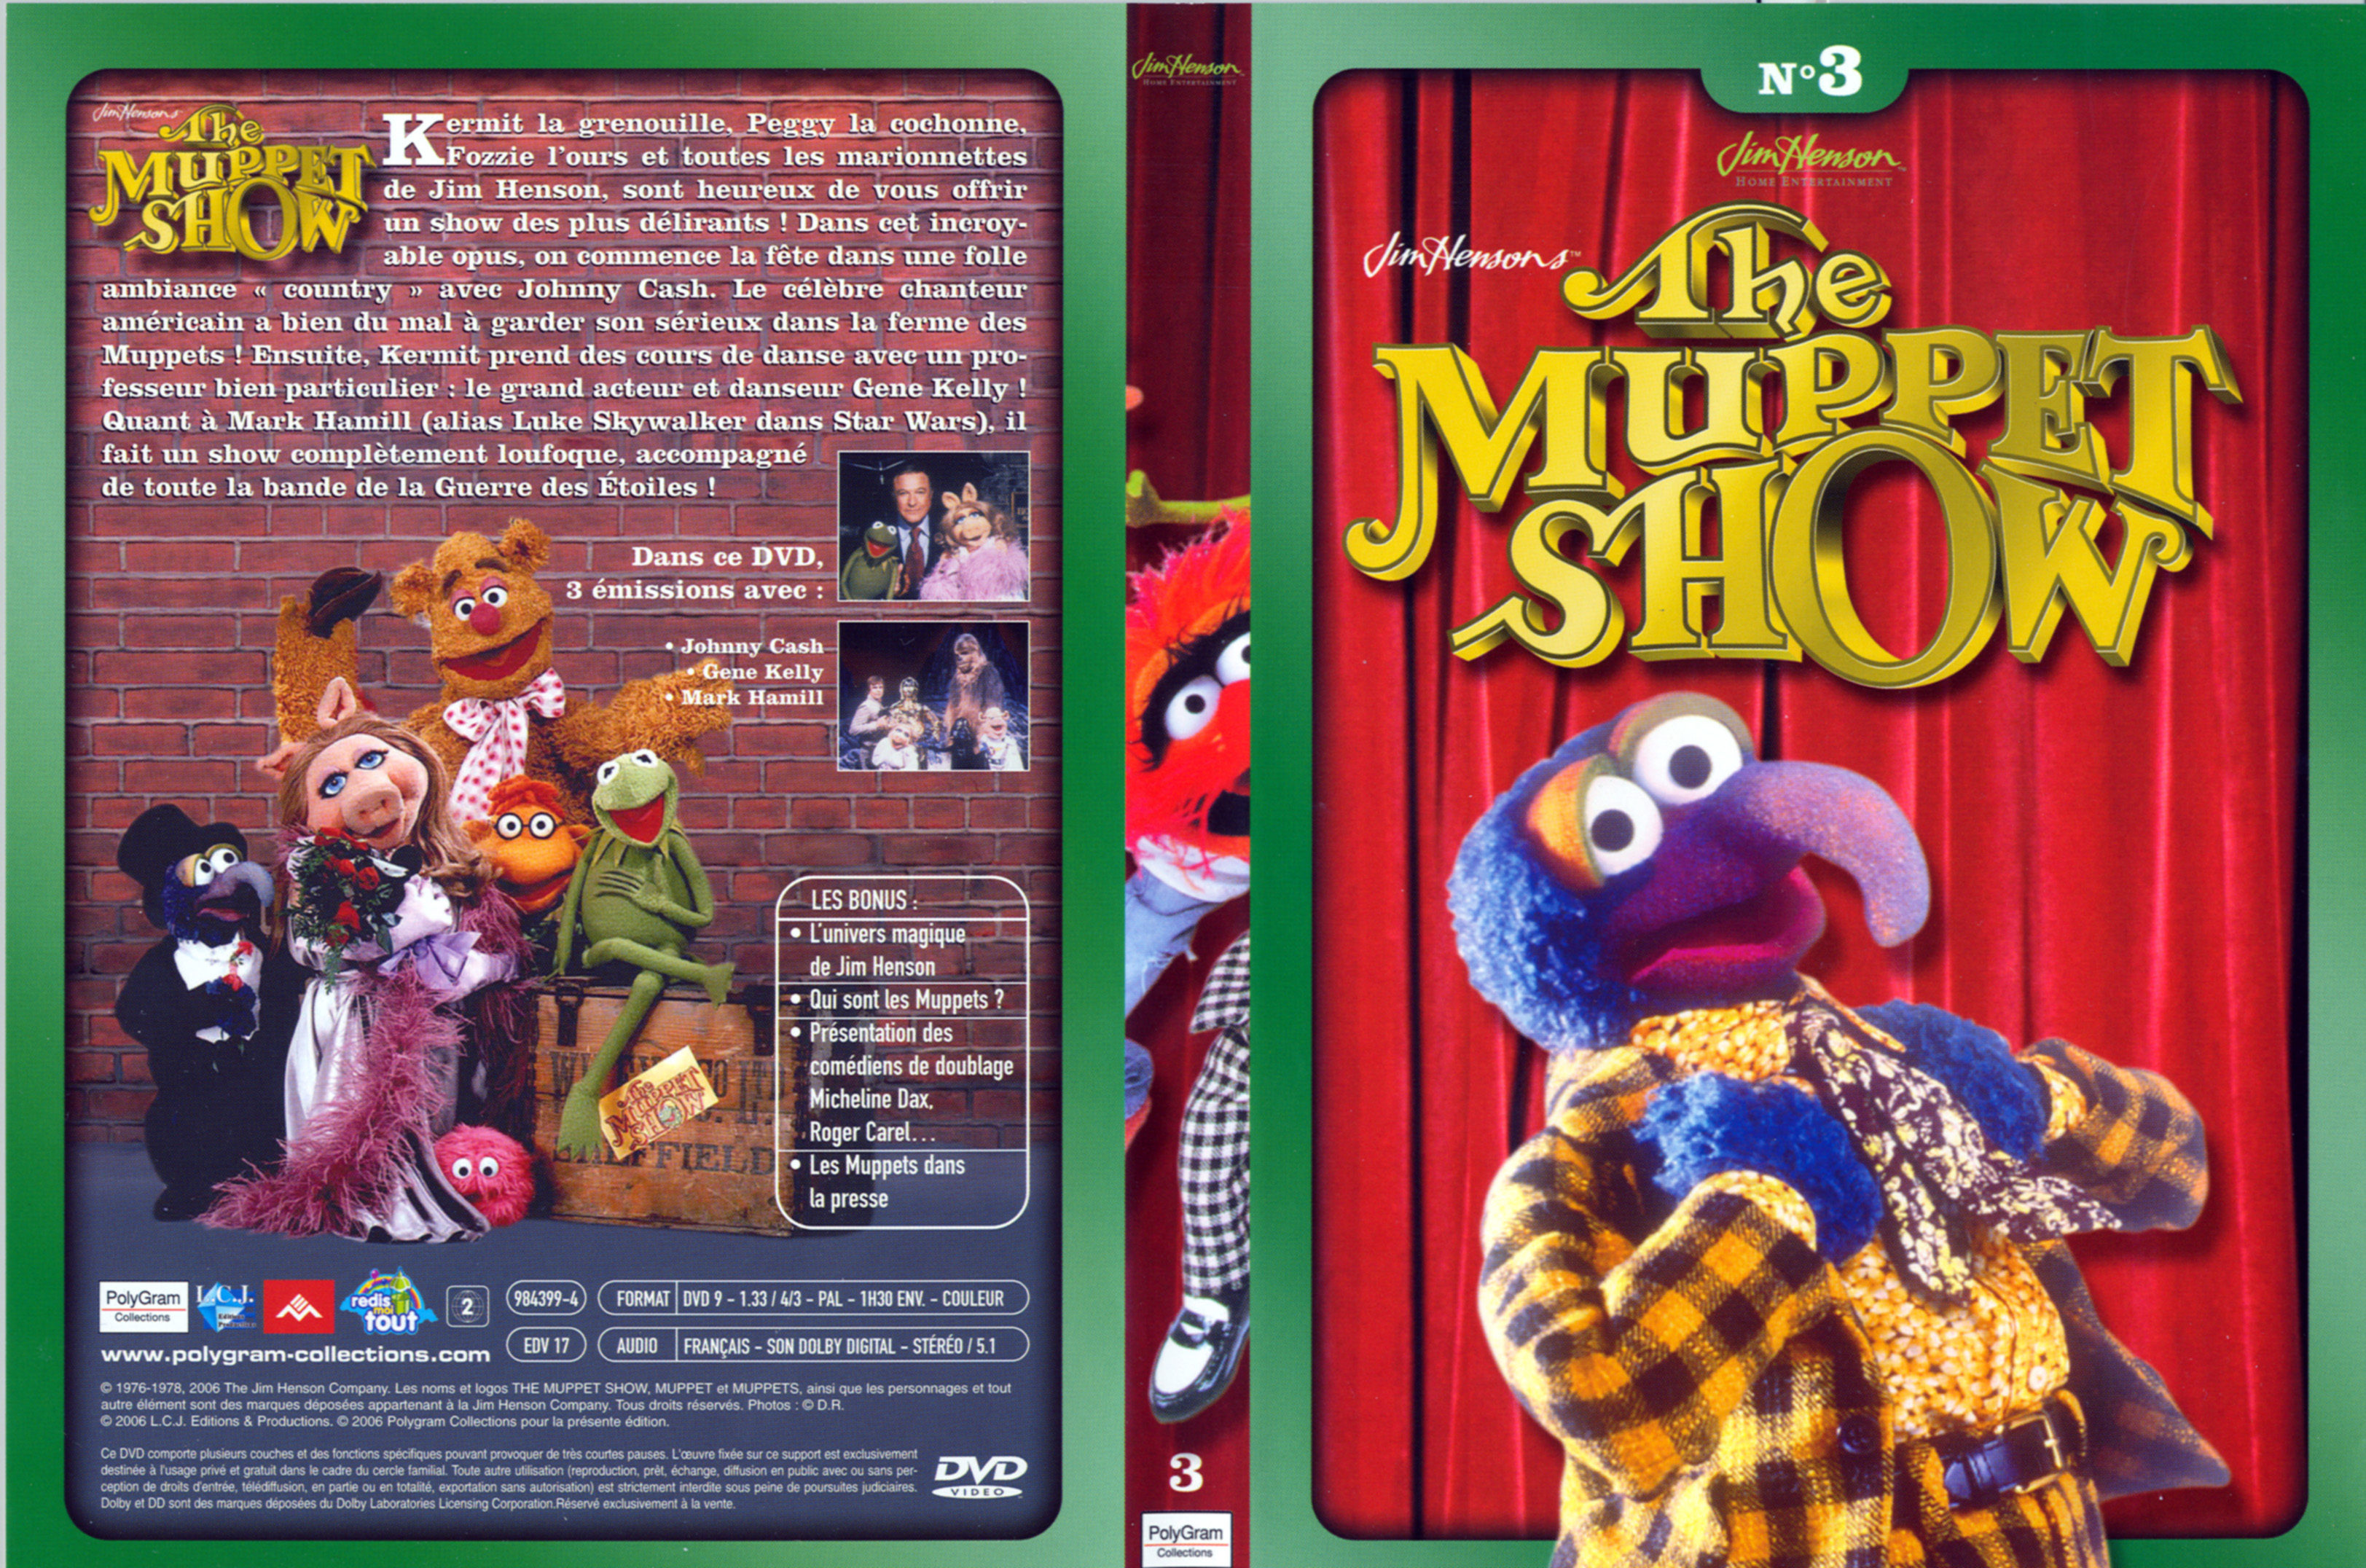 Jaquette DVD The muppet show vol 3